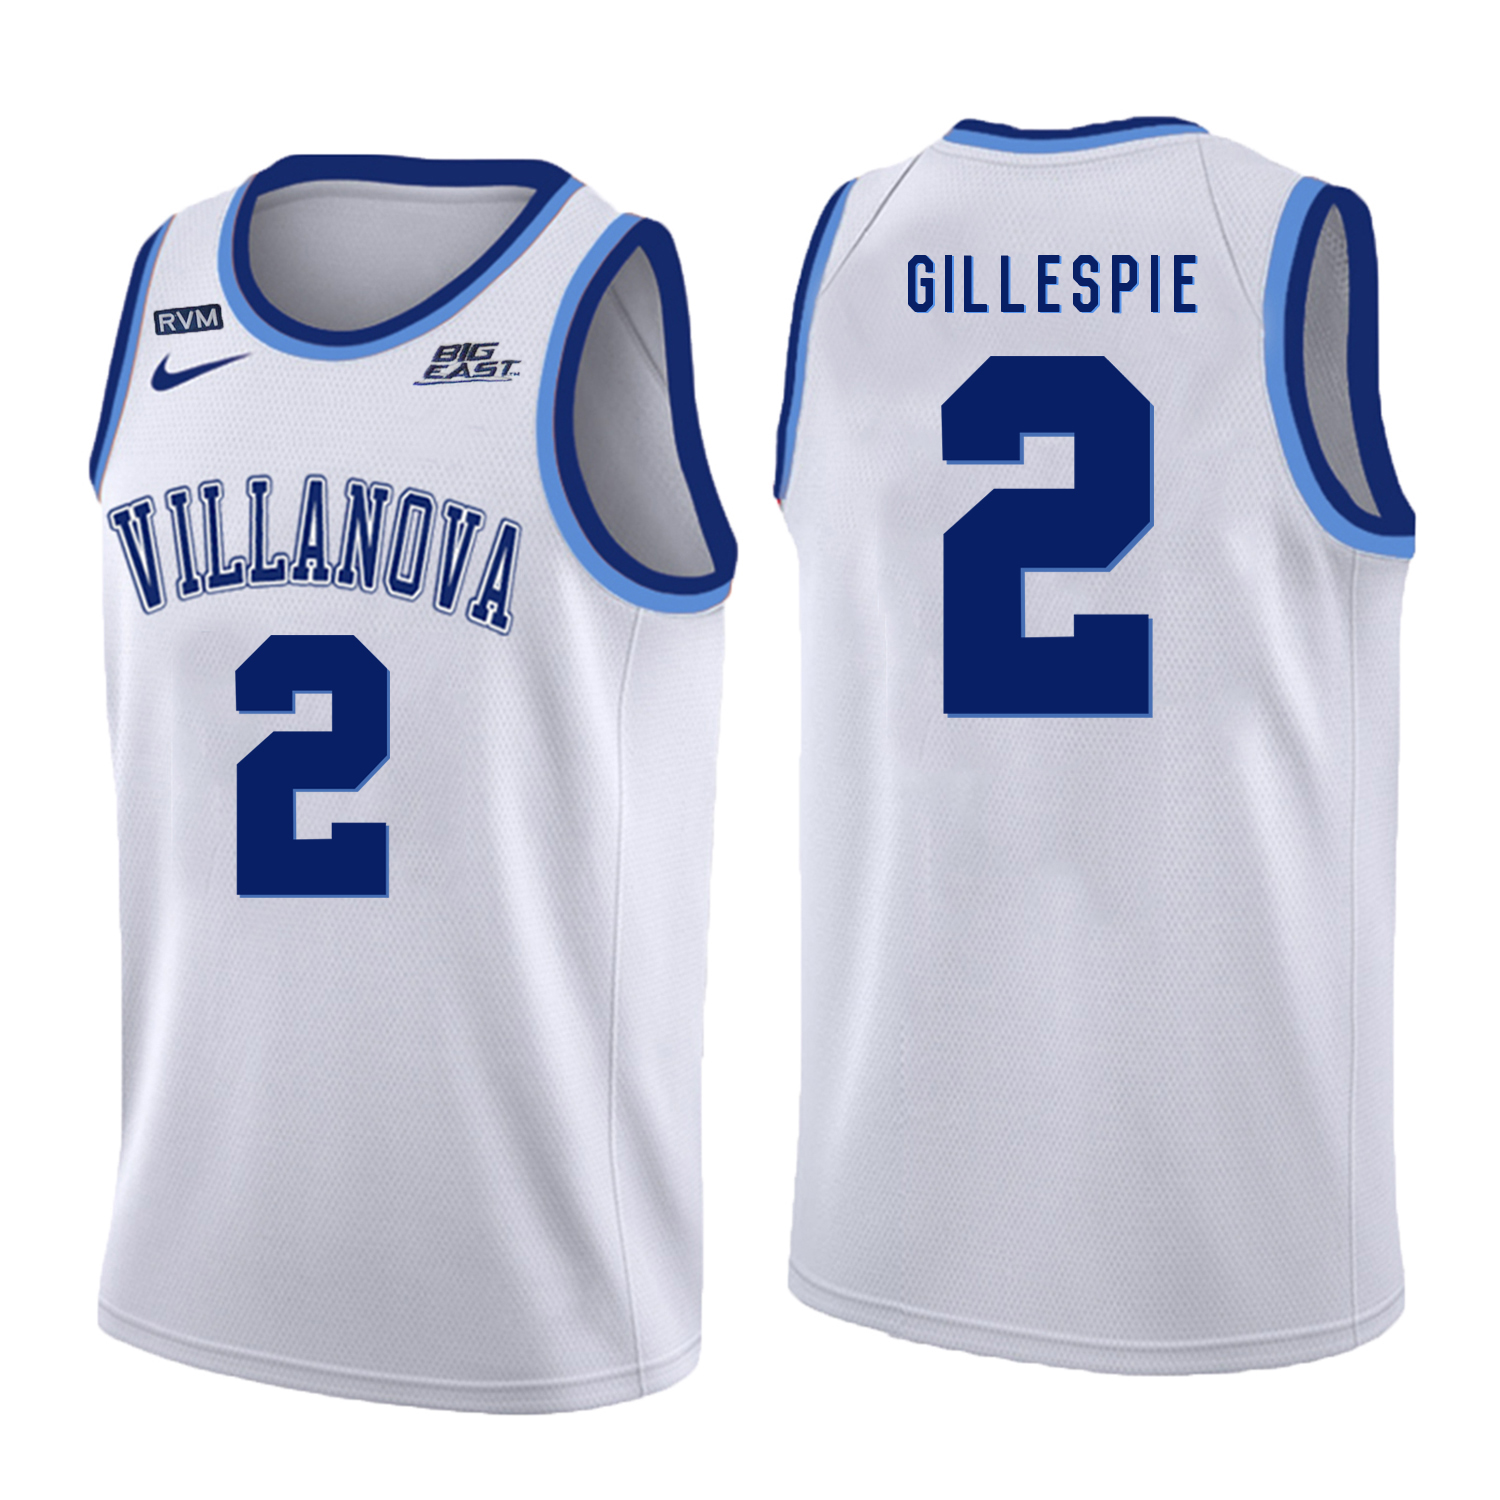 Villanova Wildcats 2 Collin Gillespie White College Basketball Jersey